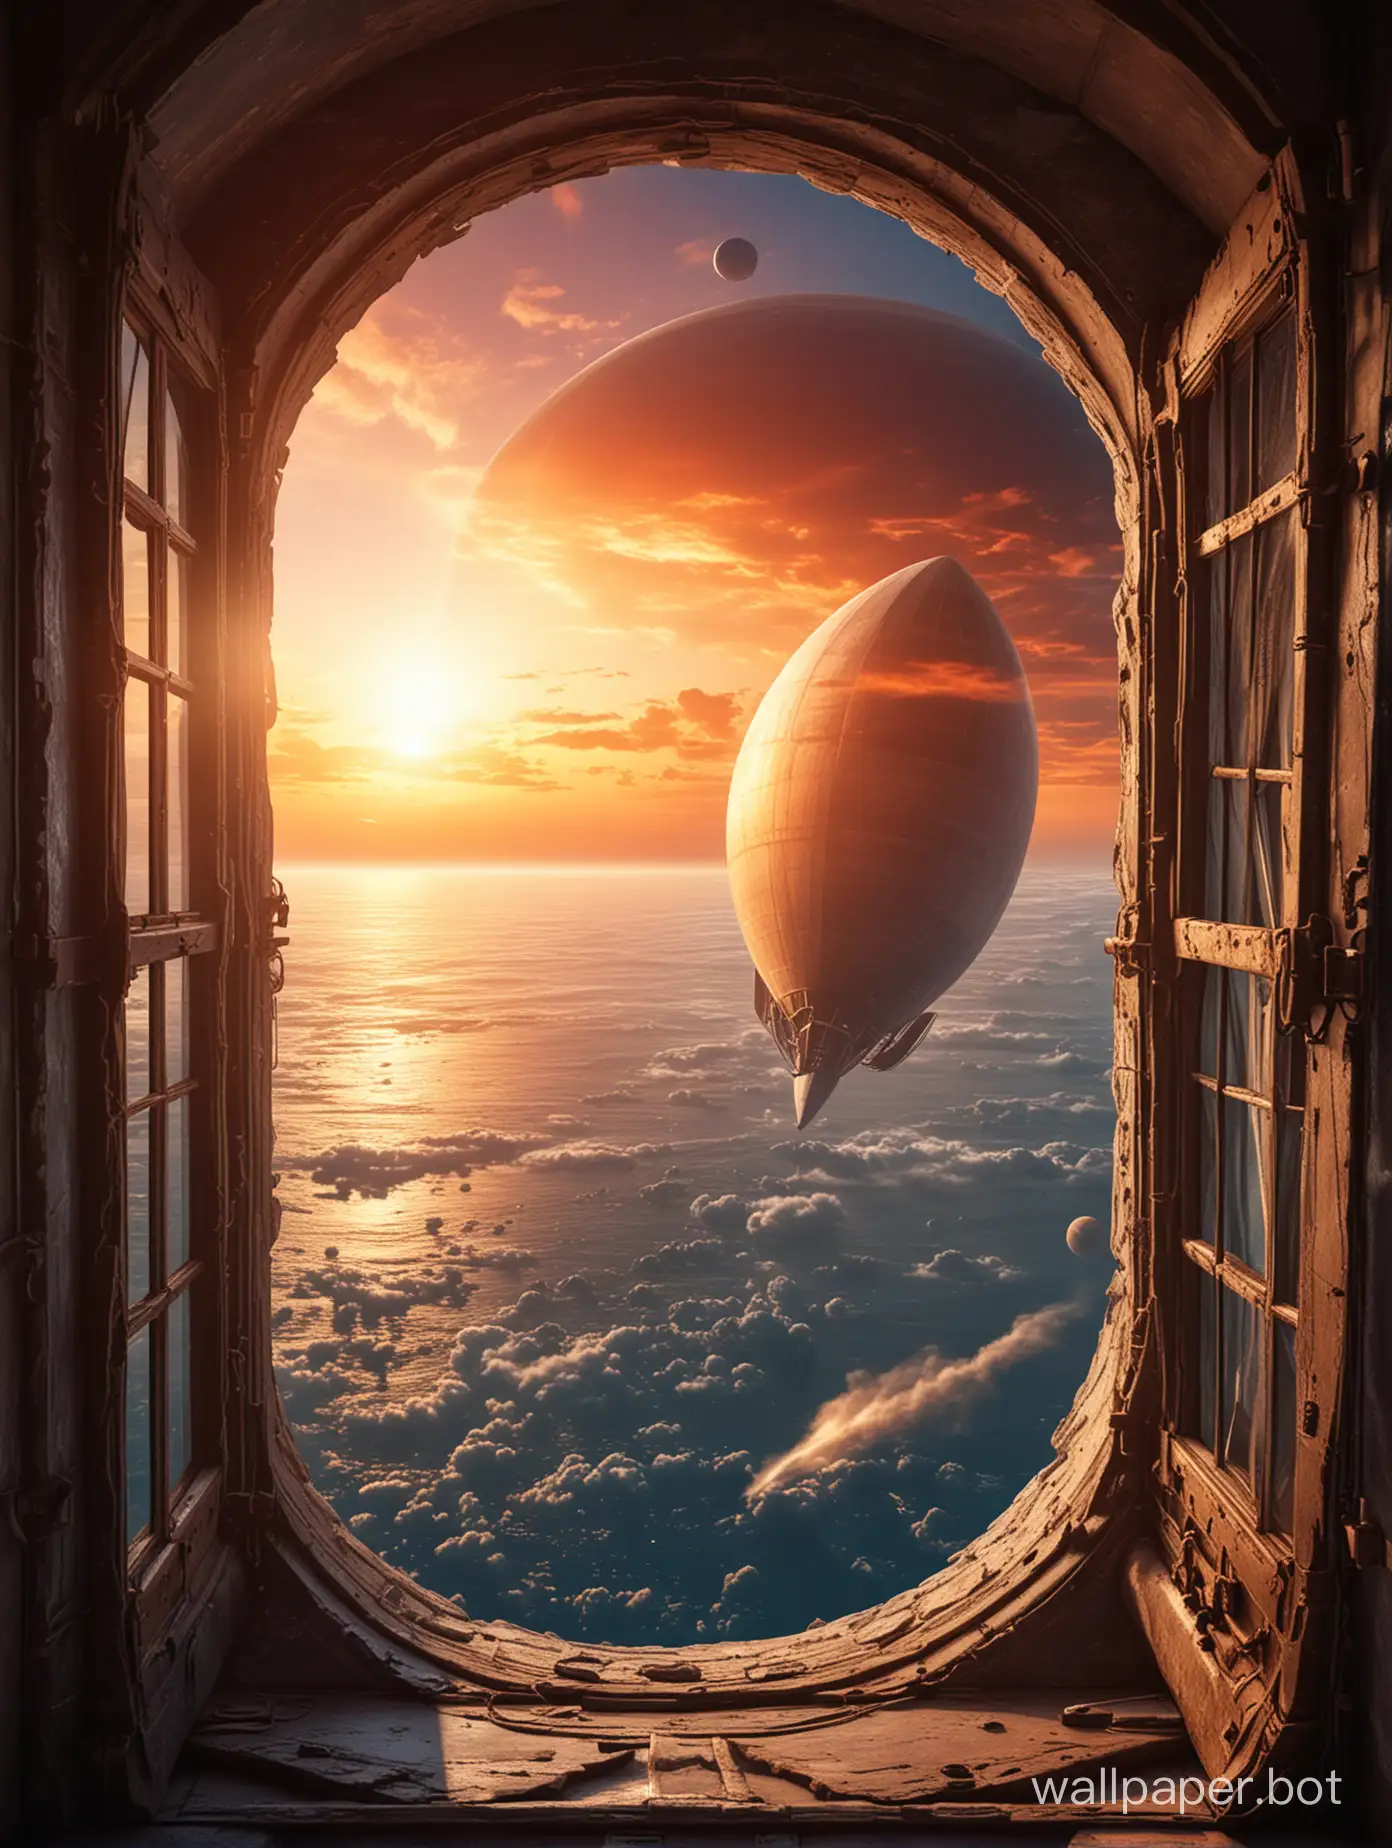 Fantasy-Space-Tower-and-Airship-at-Sunset